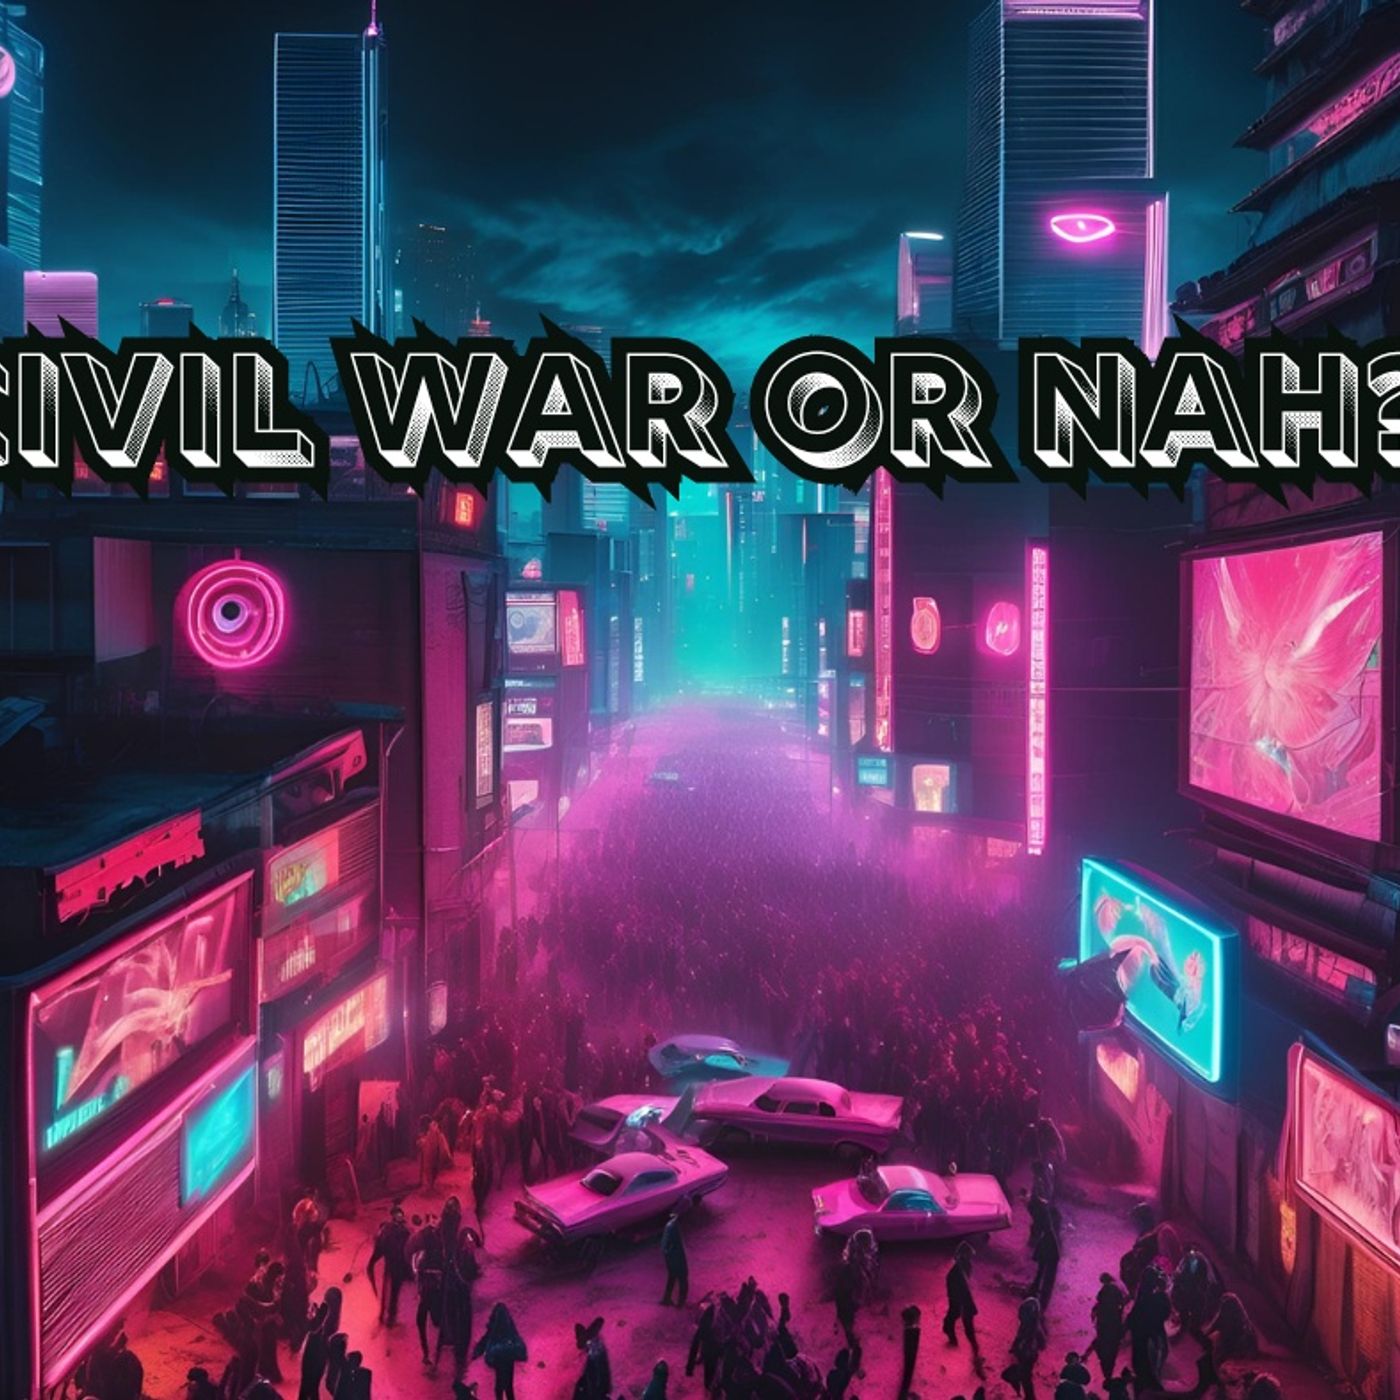 PBN Daily News - Civil War or Nah?